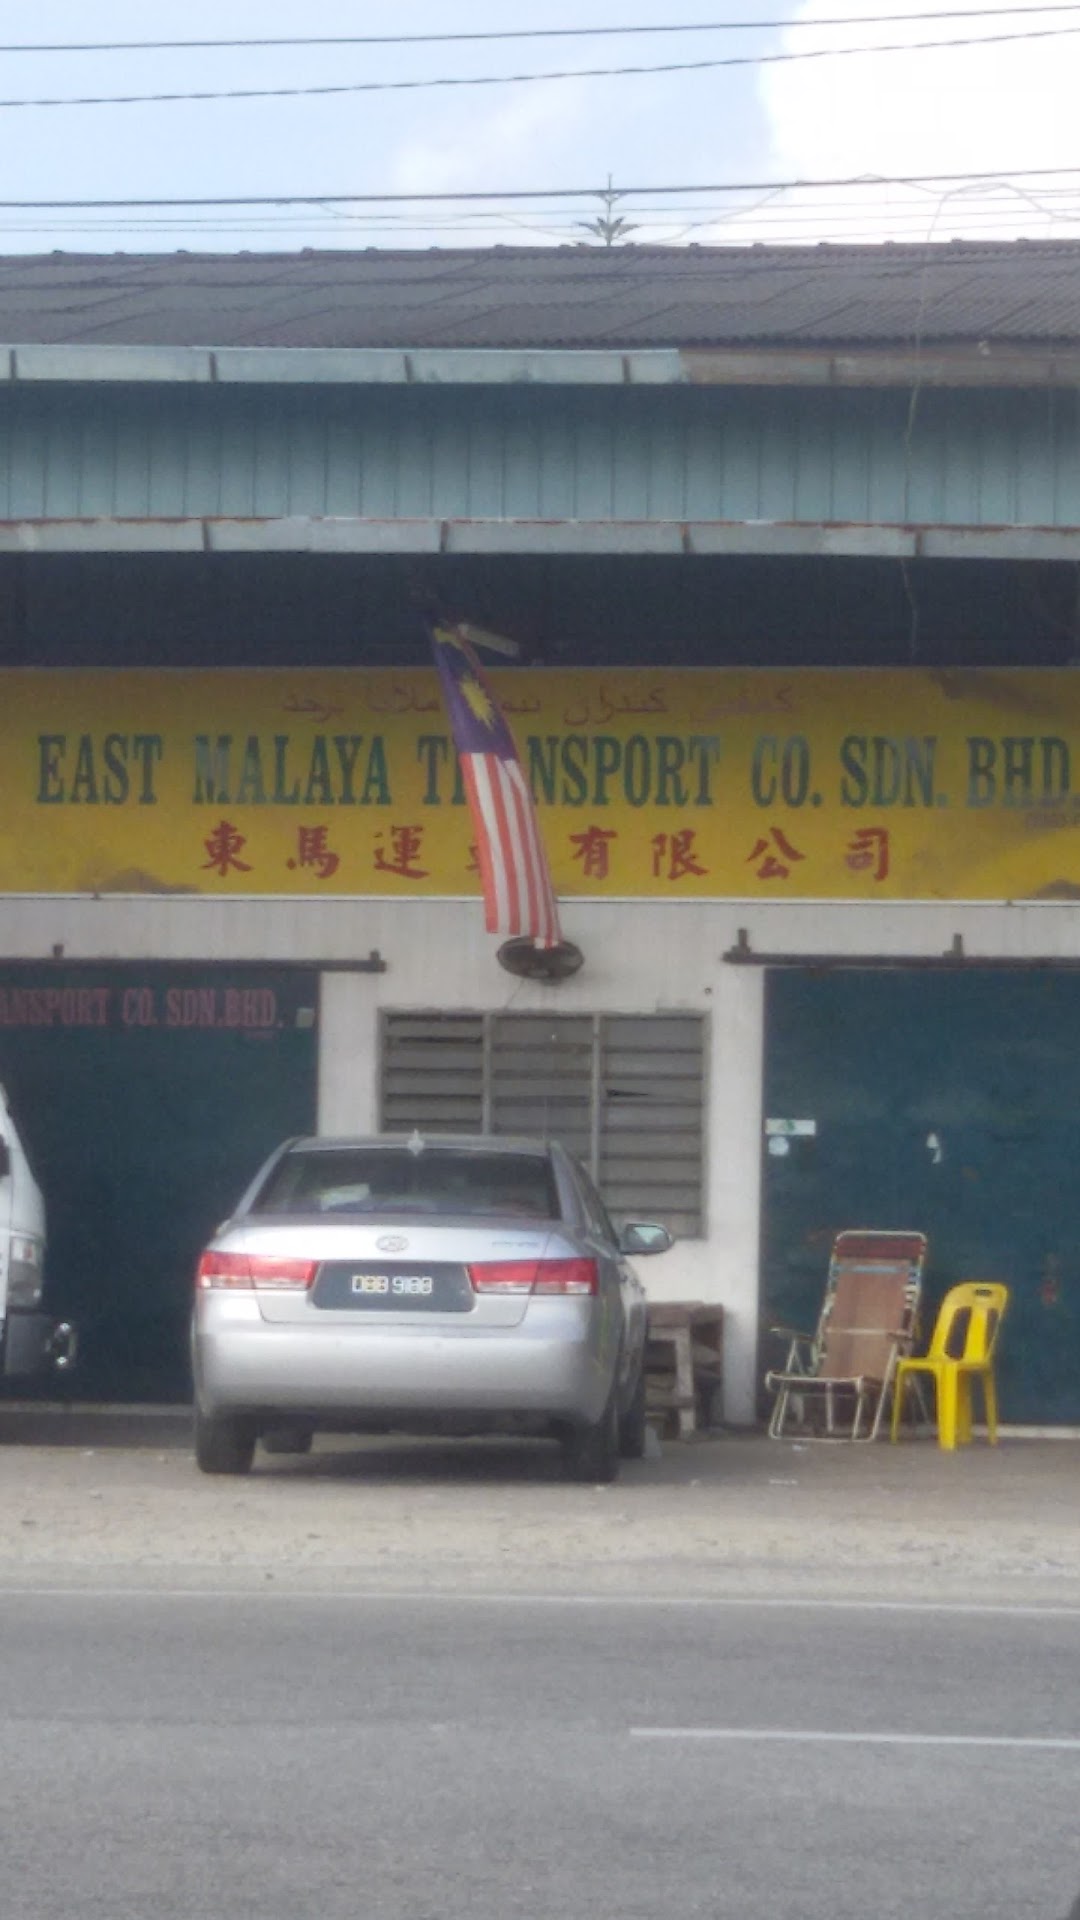 East Malaya Transport Co. Sdn. Bhd.